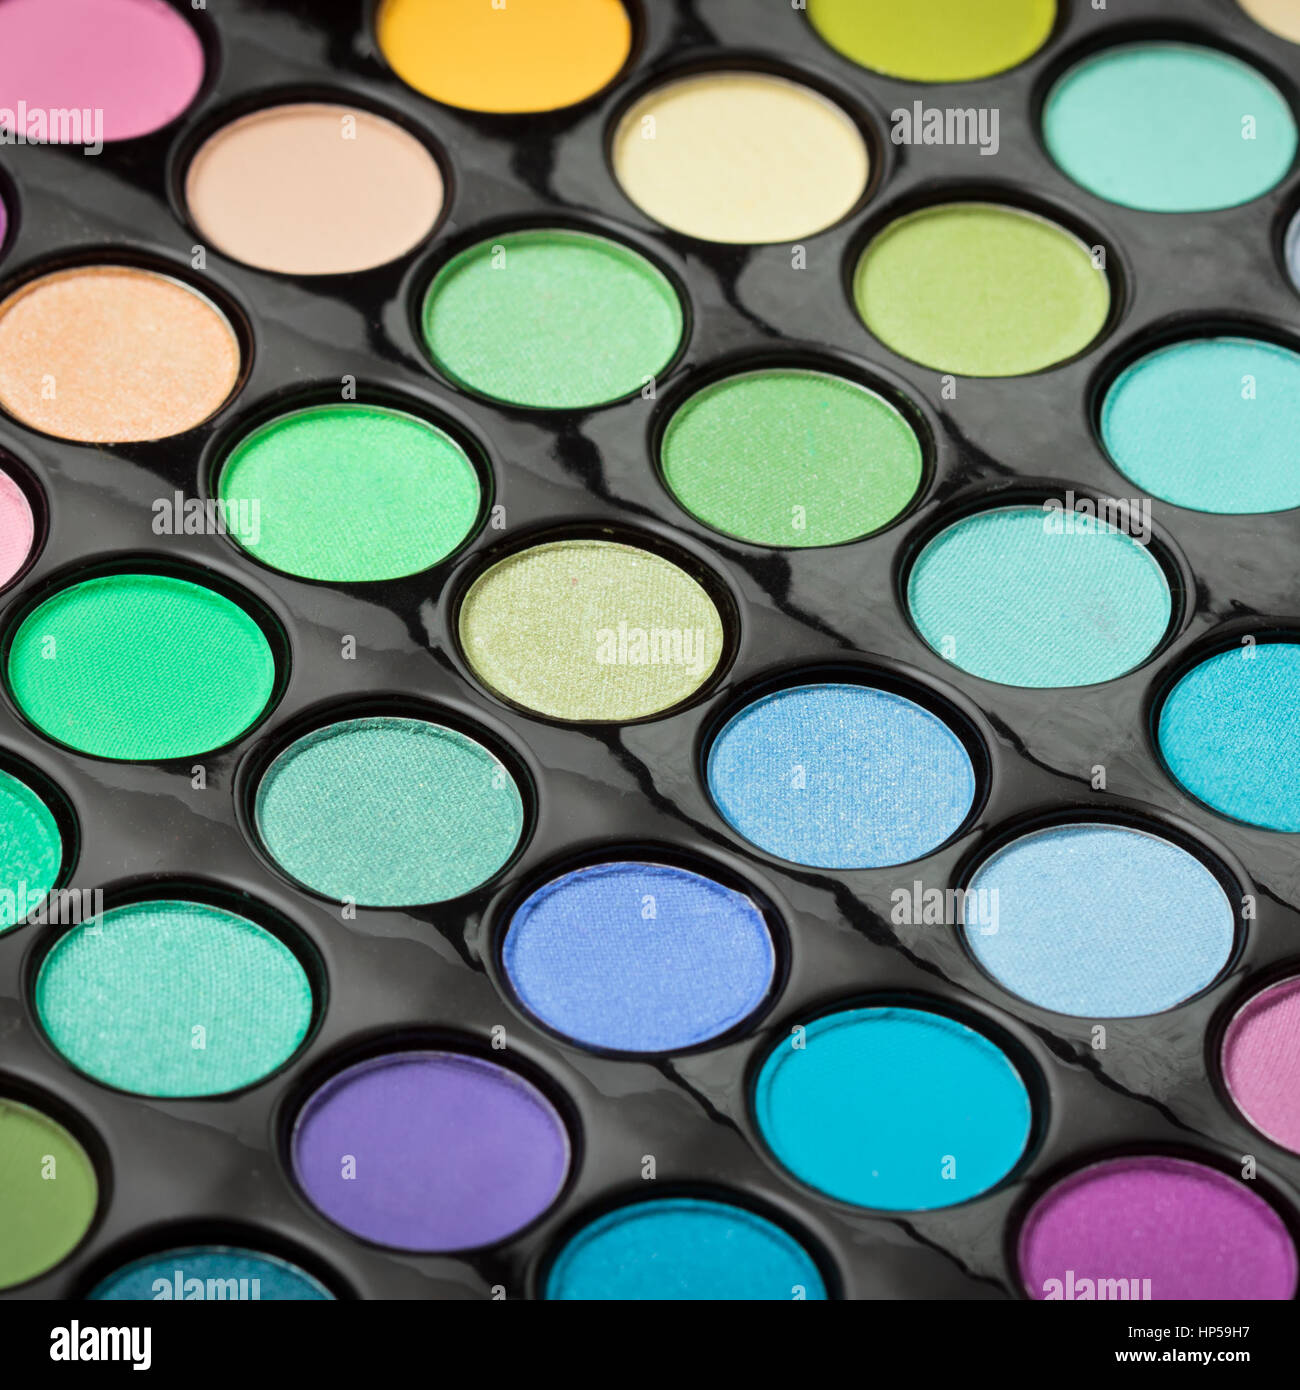 Download Glossy Make Up Powder Background Makeup Eyeshadow Palette Stock Photo Alamy